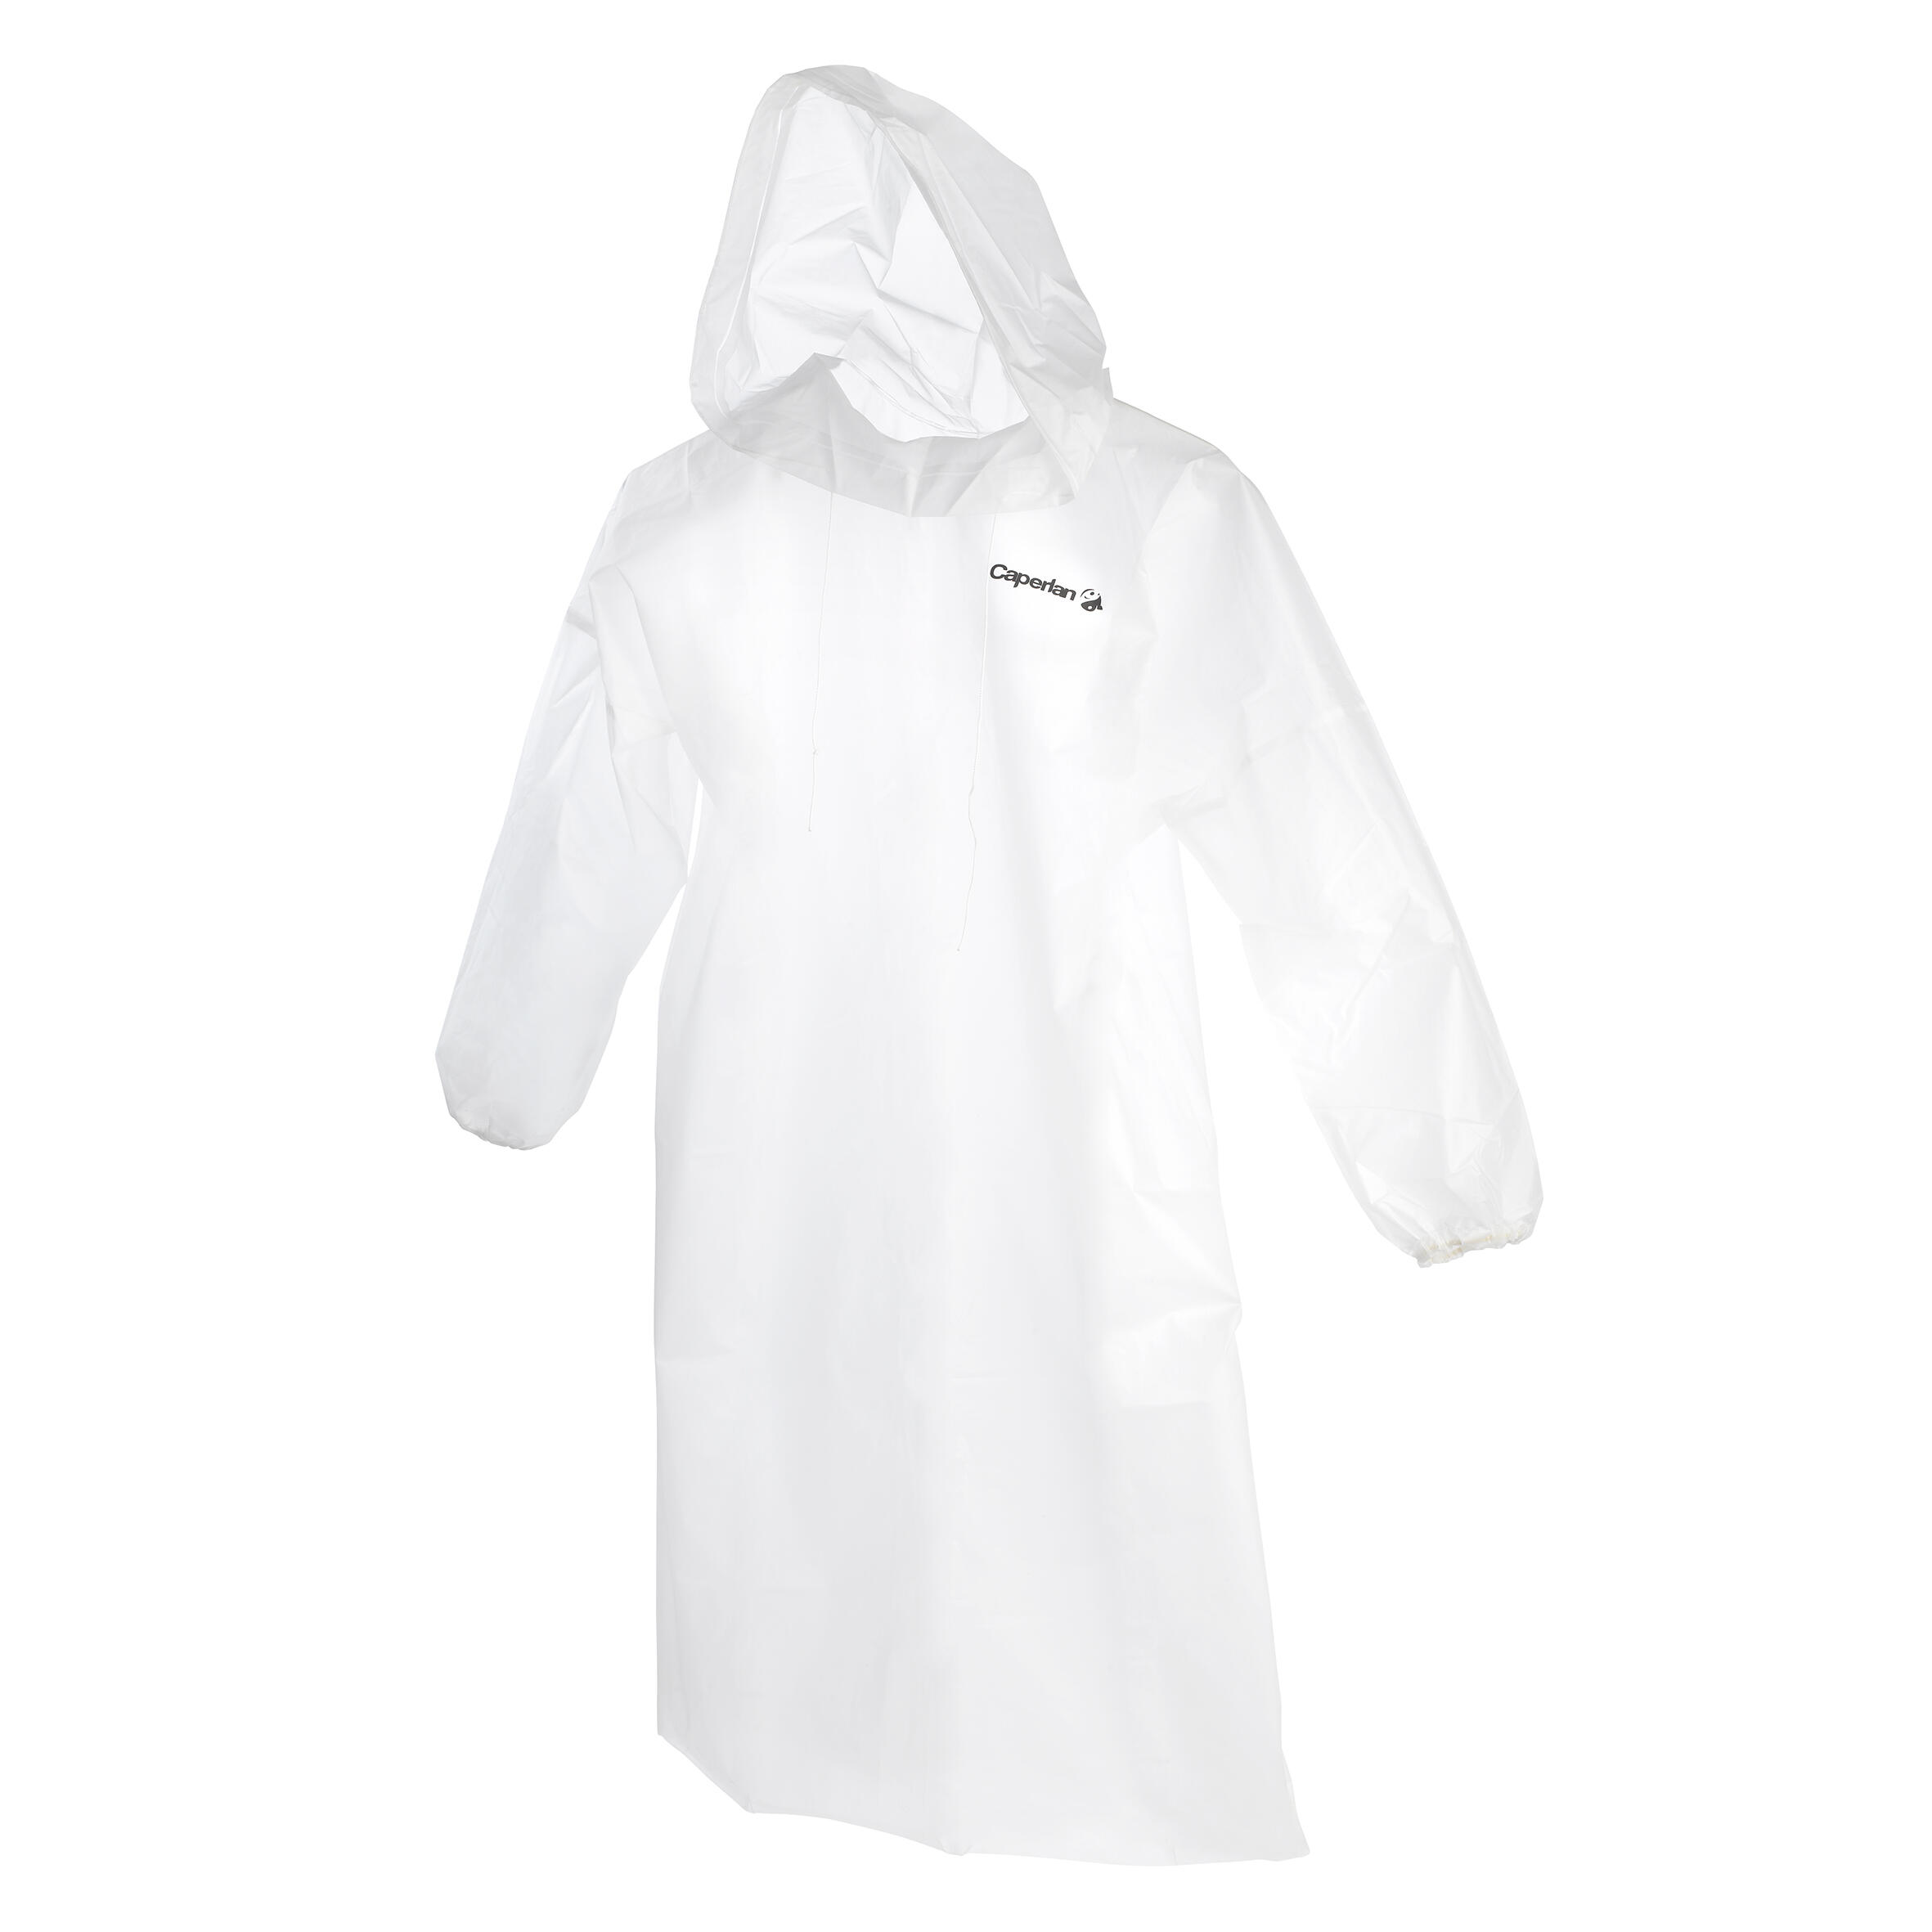 decathlon raincoat price